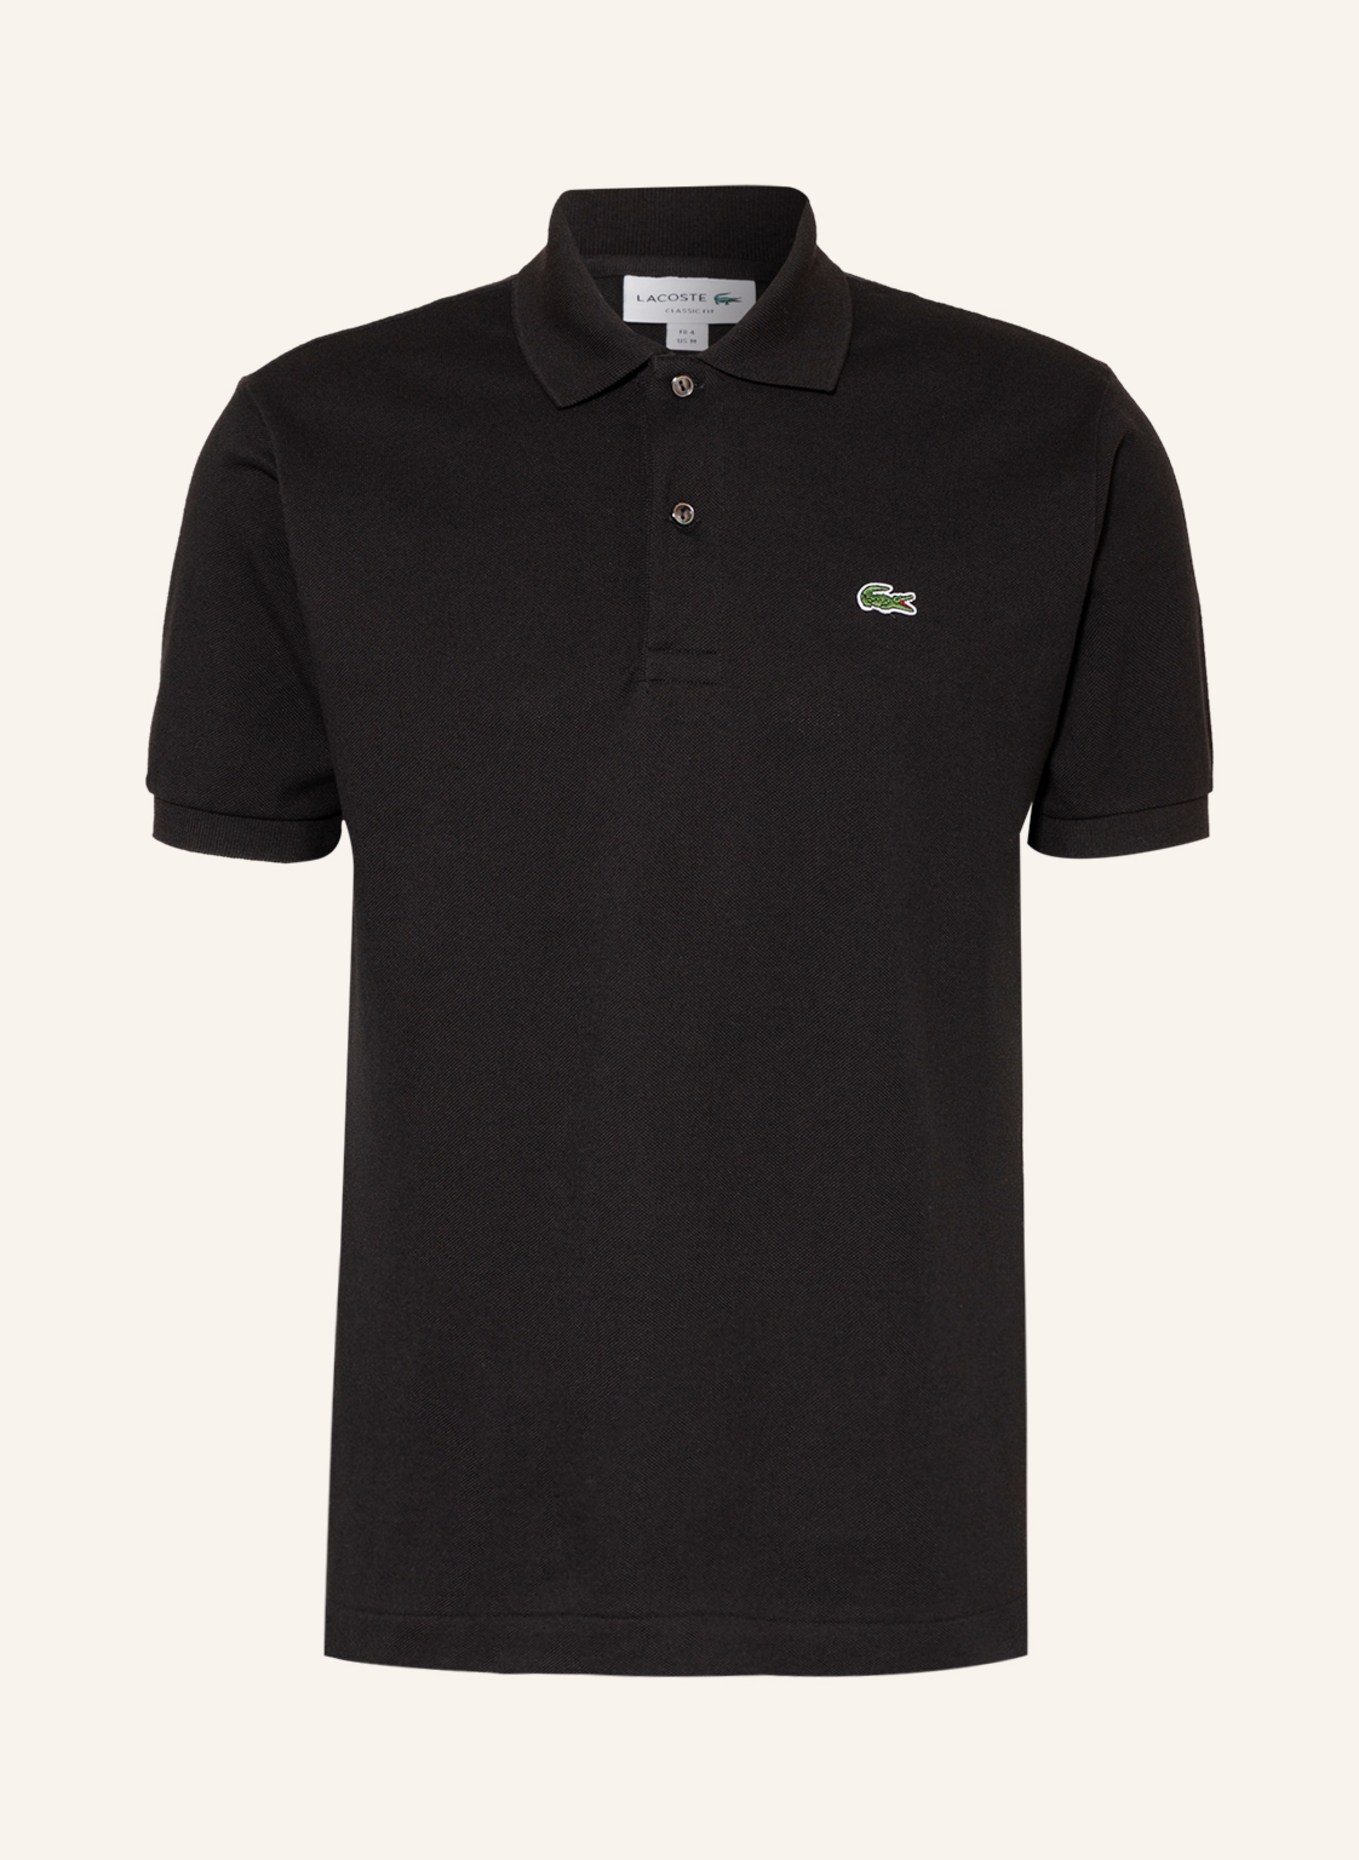 LACOSTE Piqué-Poloshirt Classic Fit, Farbe: SCHWARZ (Bild 1)